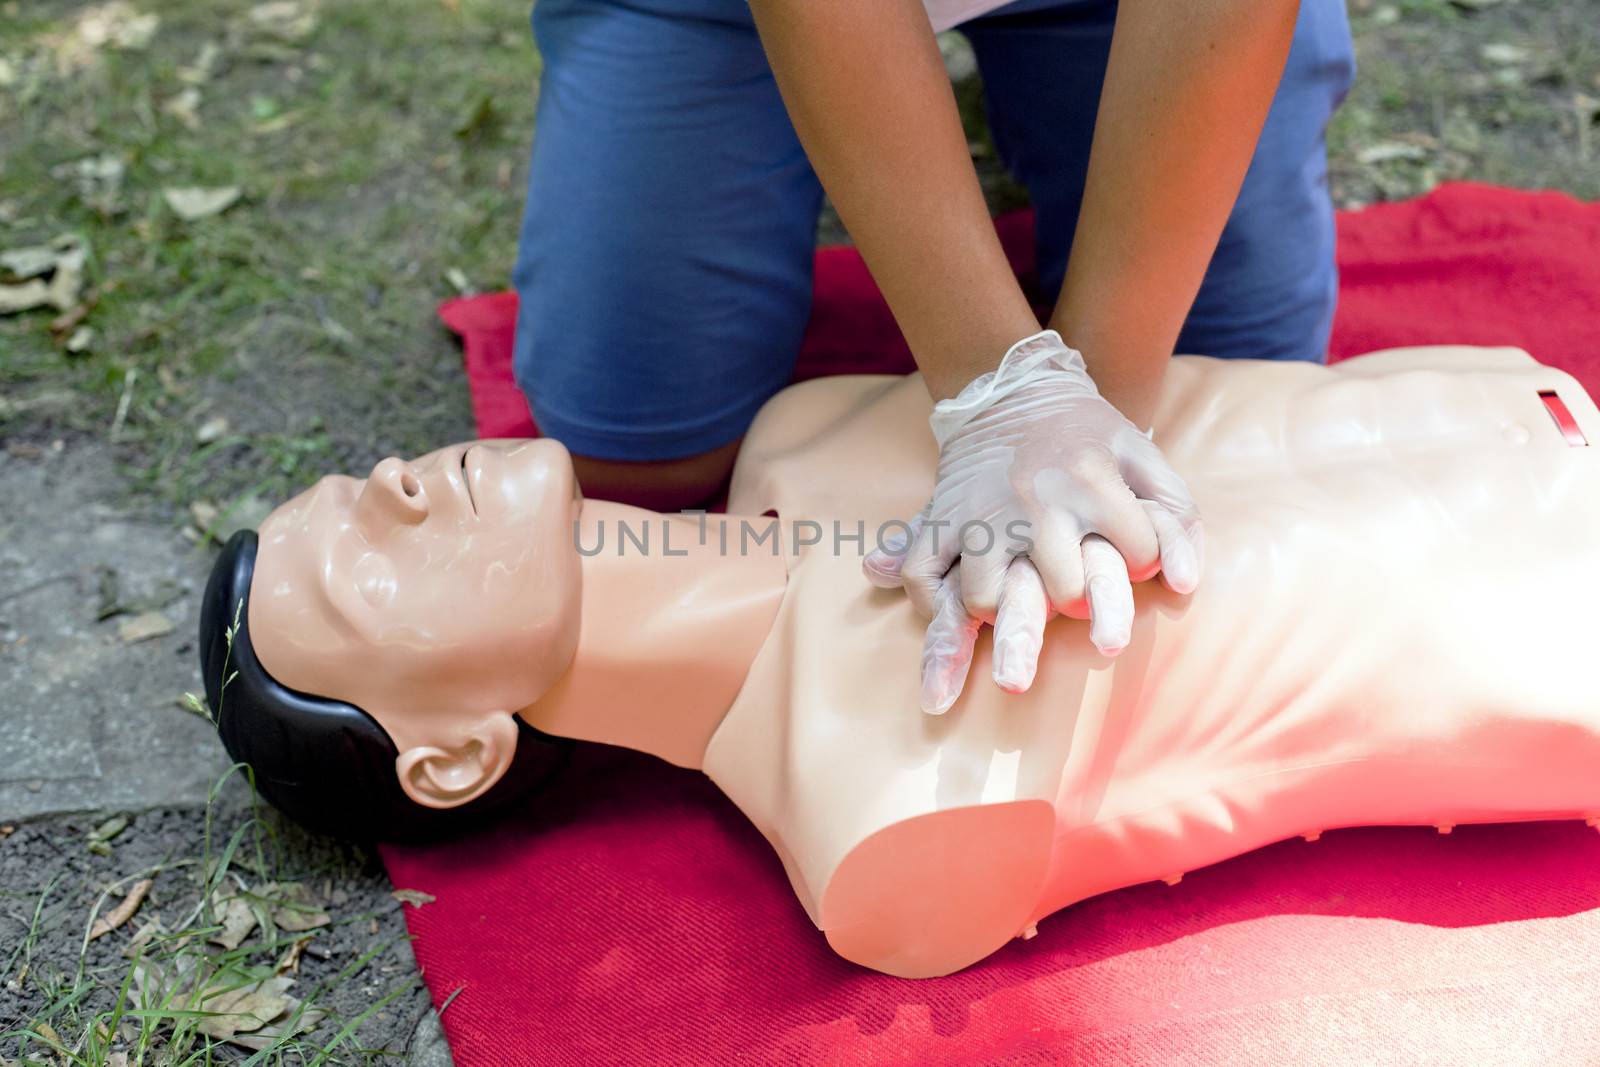 Cardiopulmonary resuscitation - CPR by wellphoto